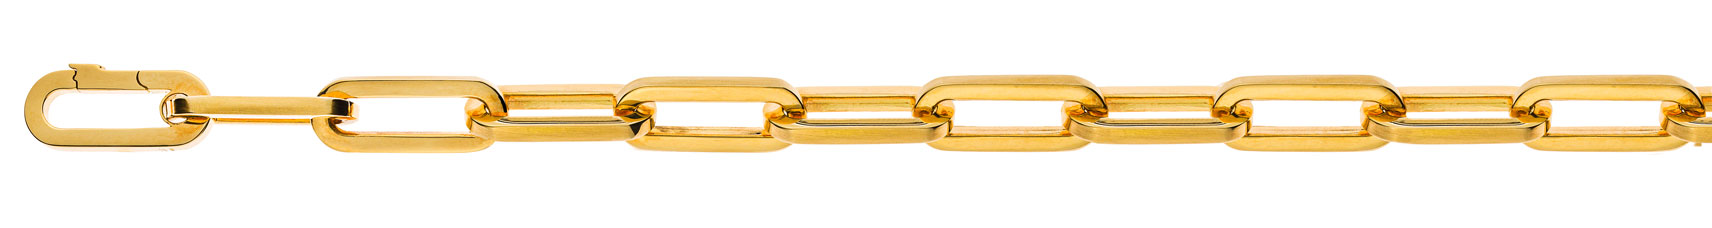 AURONOS Prestige Bracelet Ovale-Ancrage or jaune 18K 21.5cm fil Carnédo